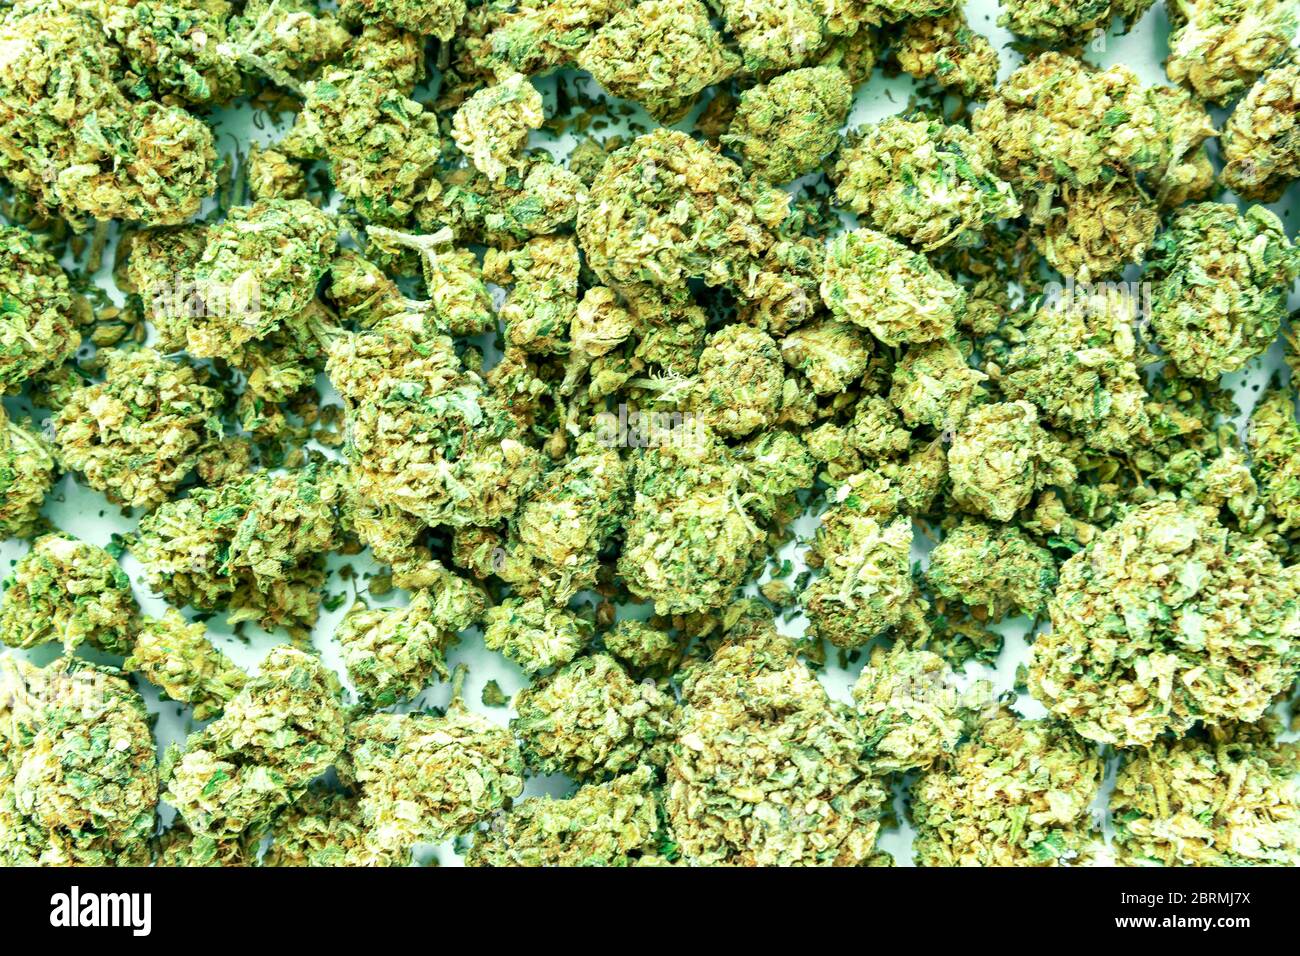 Background of cannabis buds, marijuana weed. Top view. Stock Photo